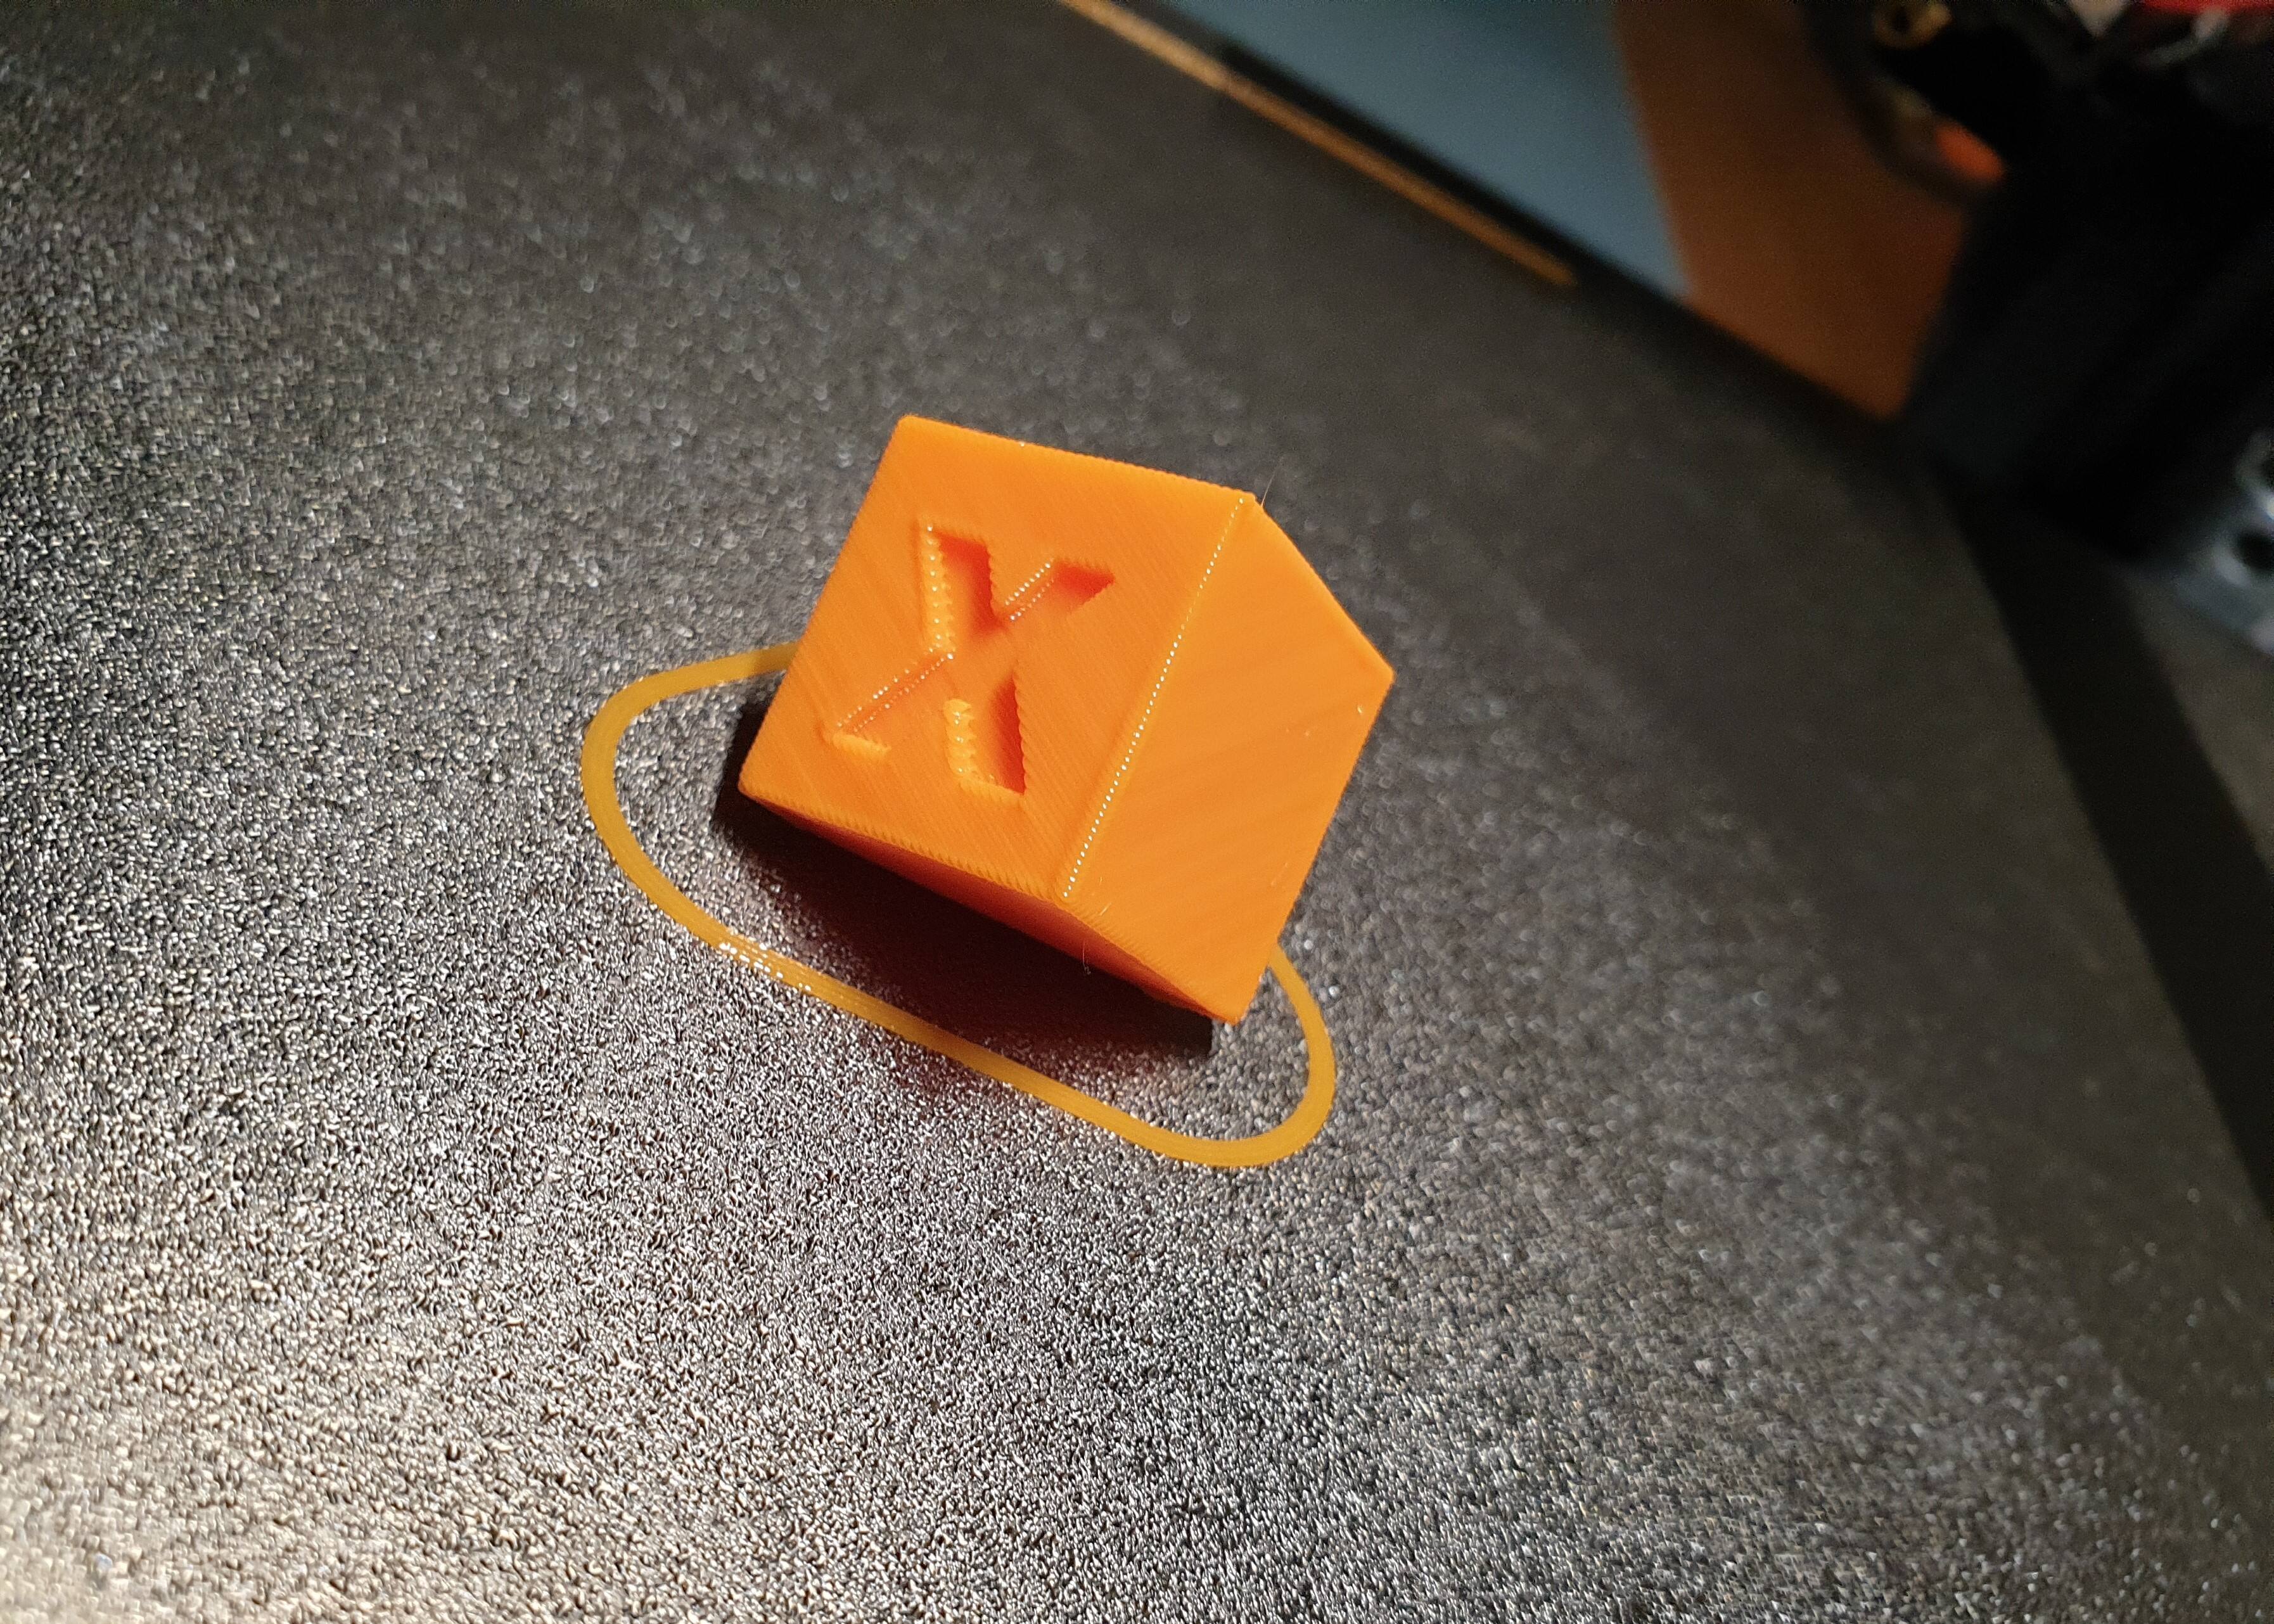 Test Print Torture Calibration Cube Printer Tuning XYZ